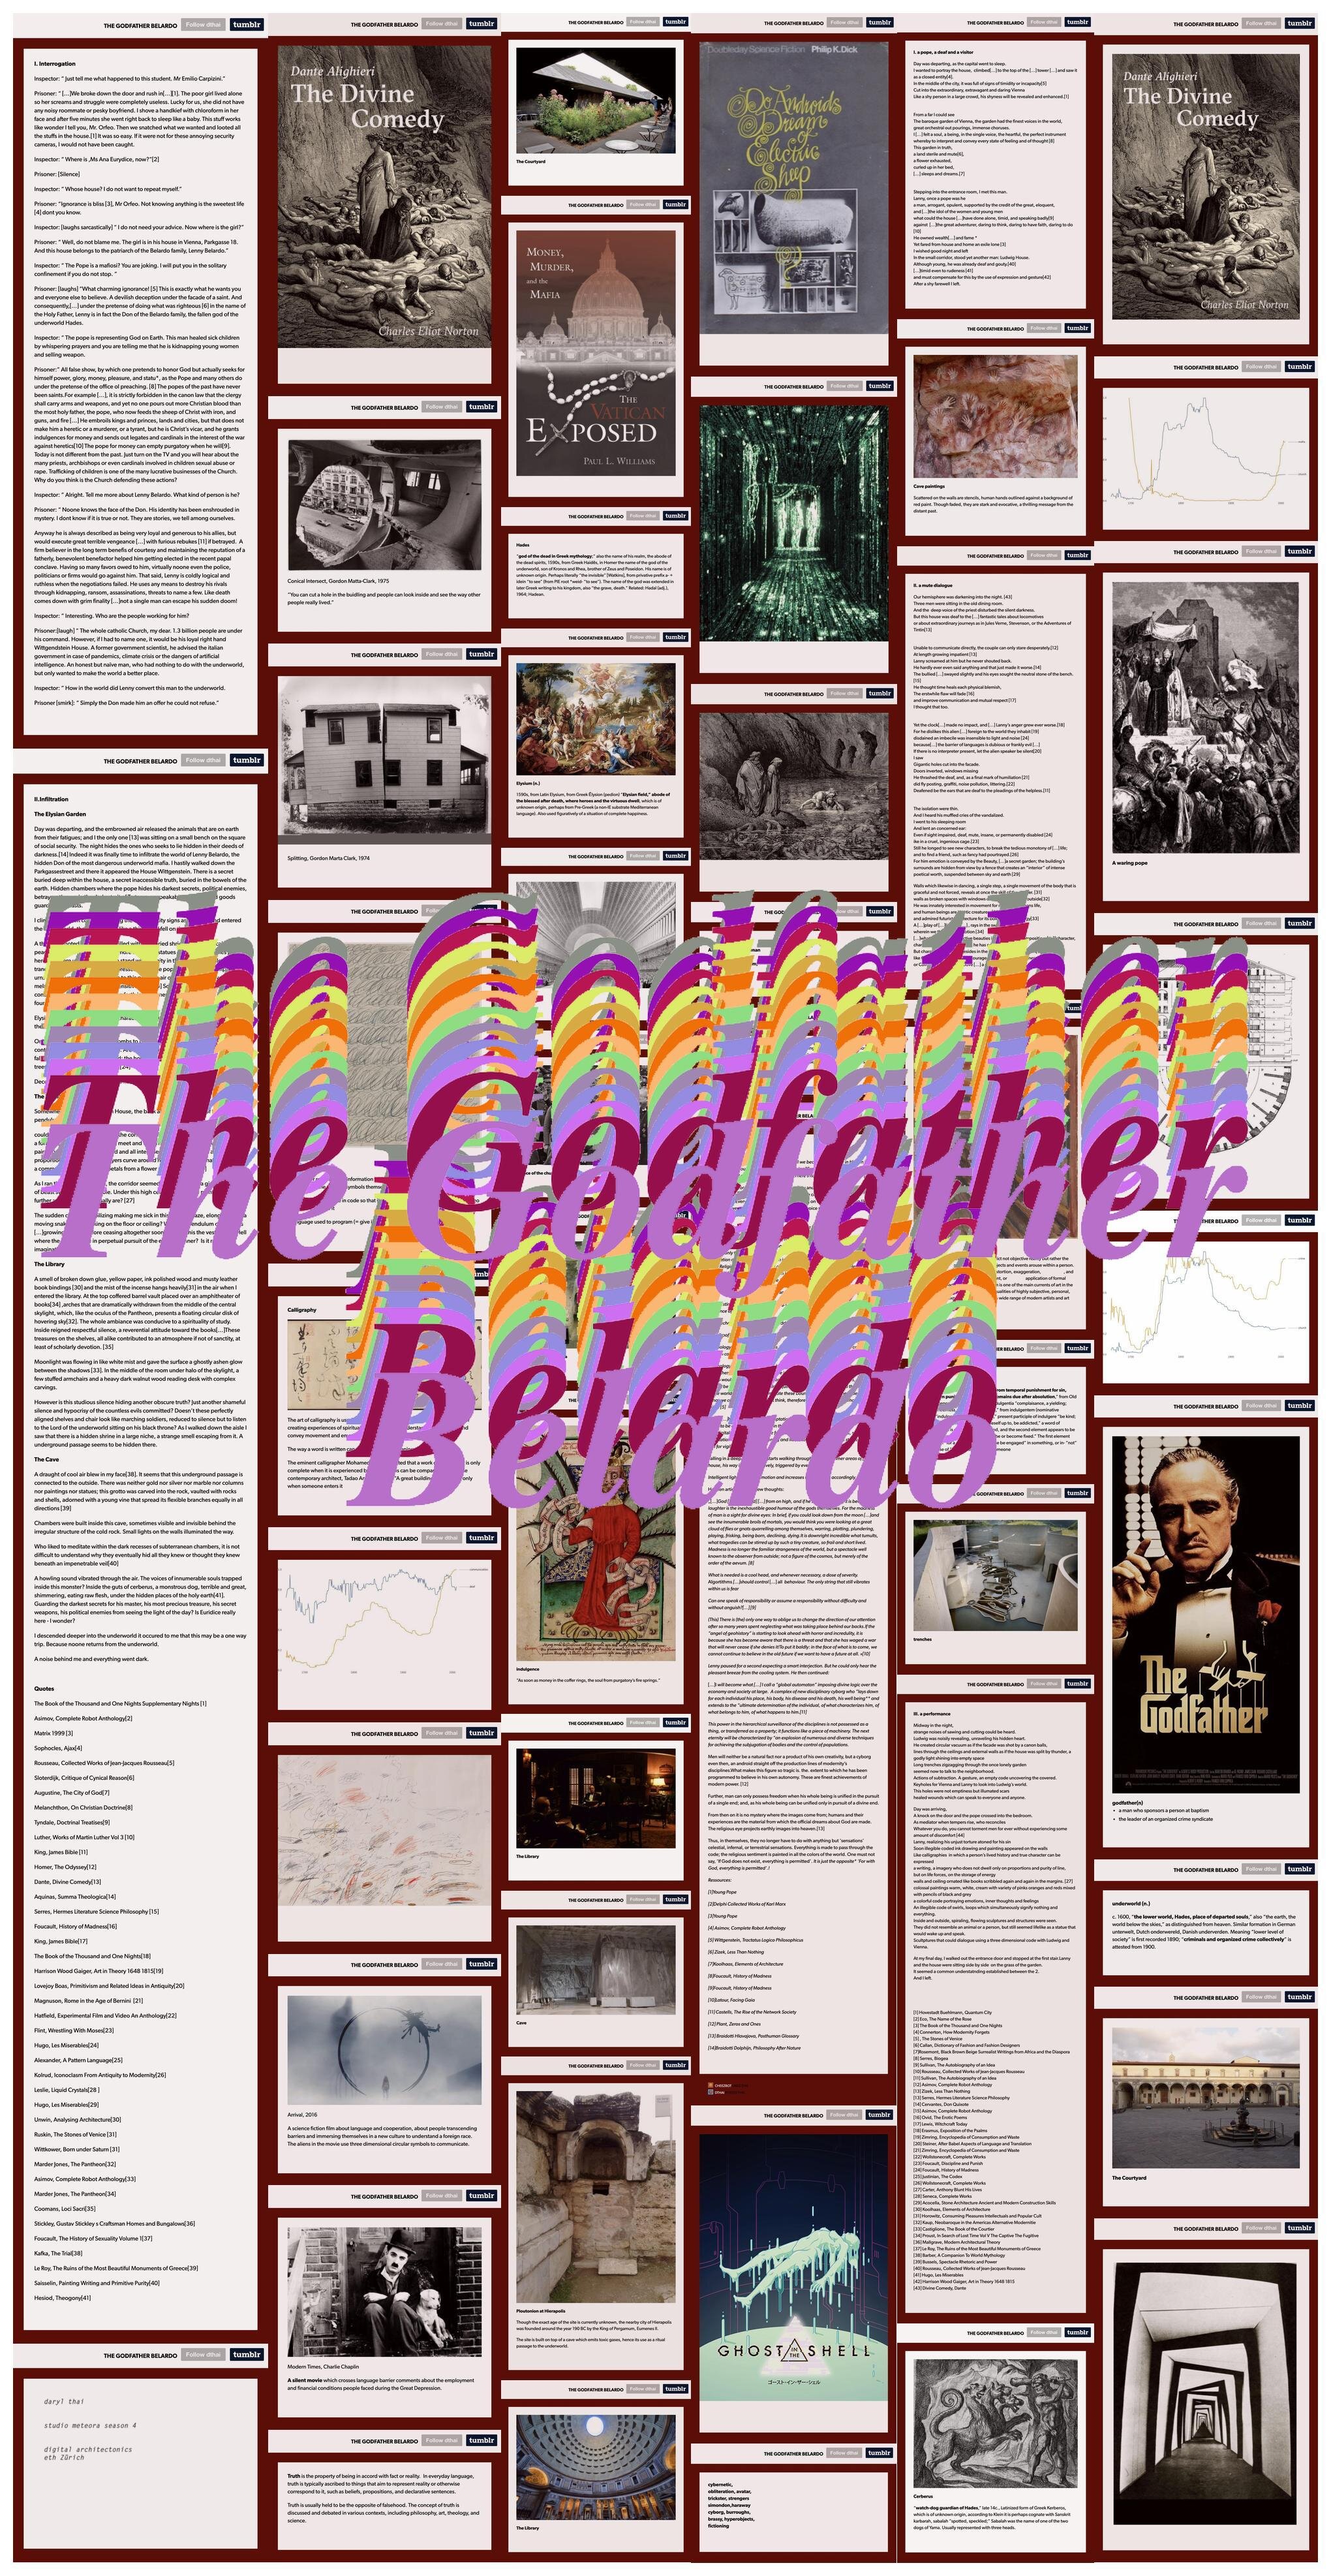 The Godfather Belardo.jpg